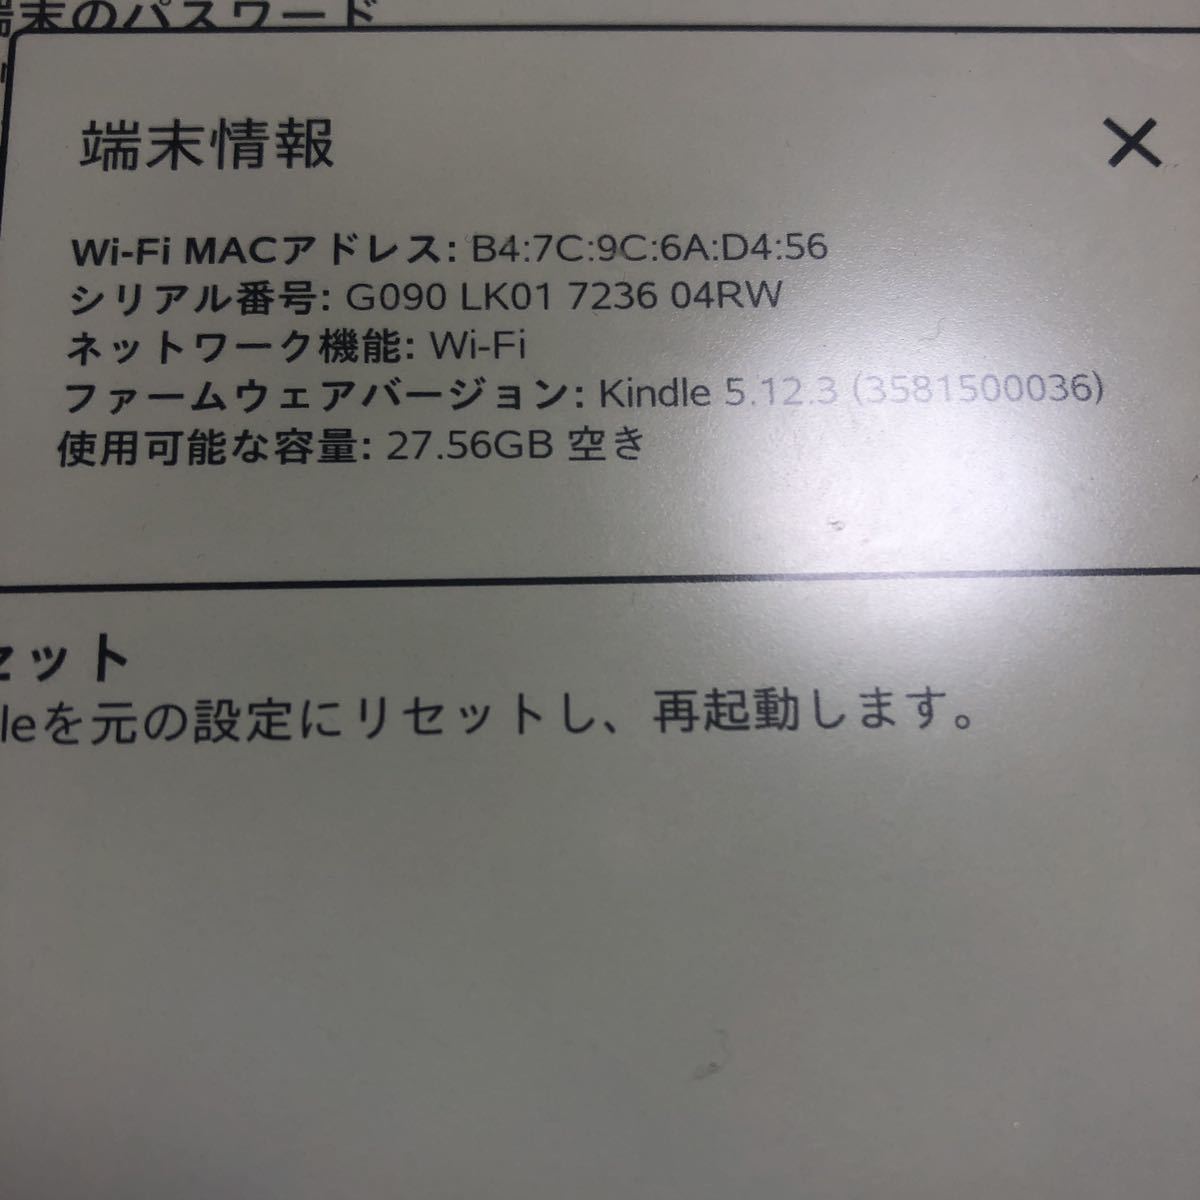 Kindle Paperwhite no. 7 generation DP75SDI Wi-Fi 32GB